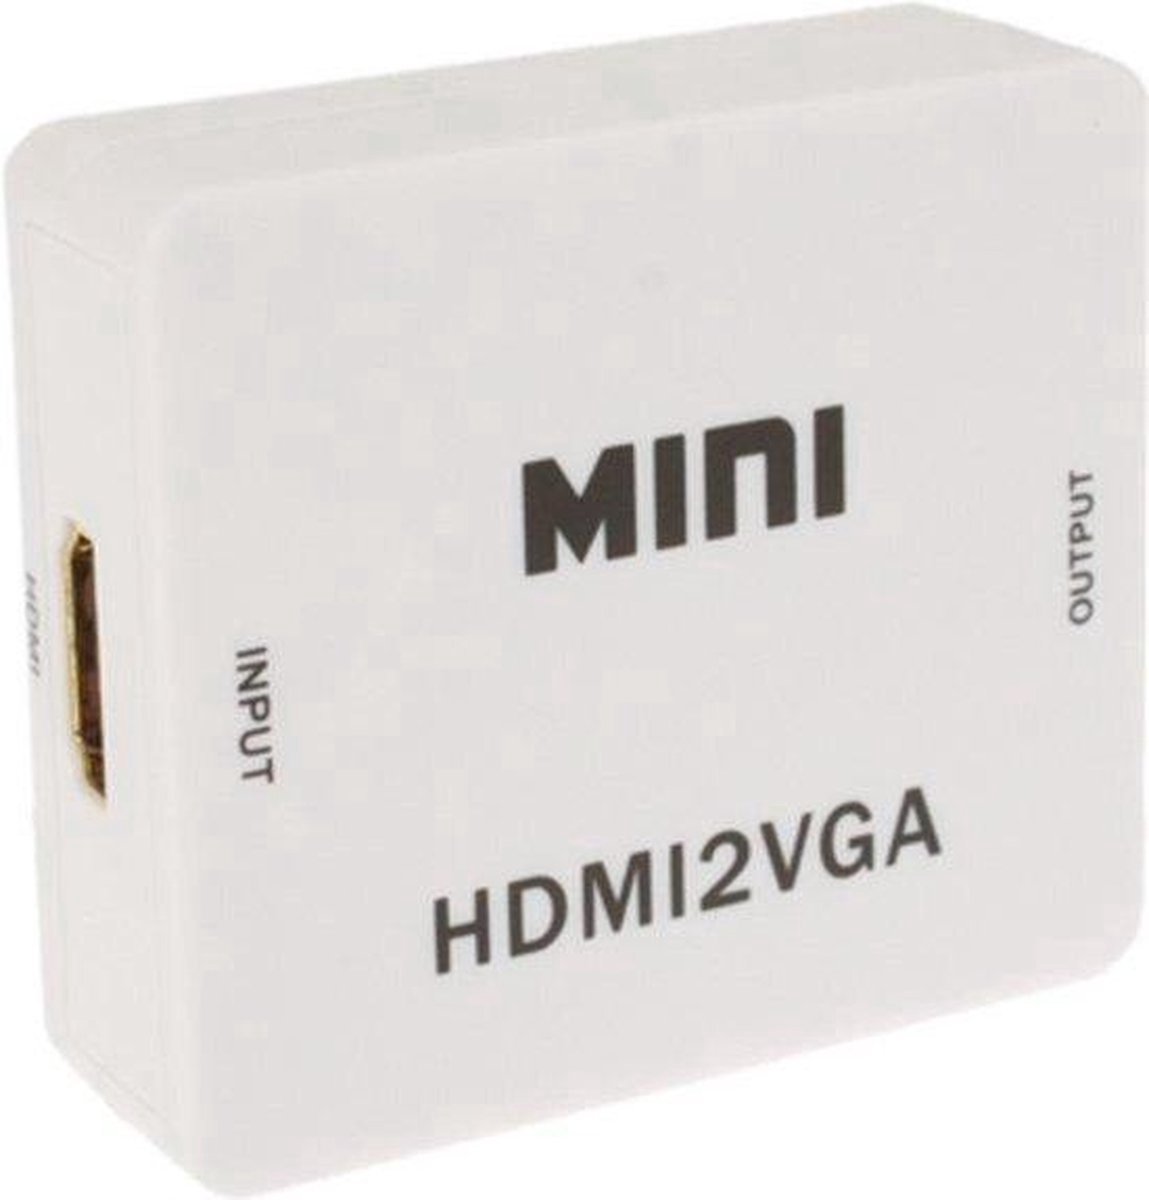 Techvavo® HDMI naar VGA Converter - HDMI naar VGA Adapter - 1080p Full HD (50/60 Hz) - Video Kabel Adapter - Wit